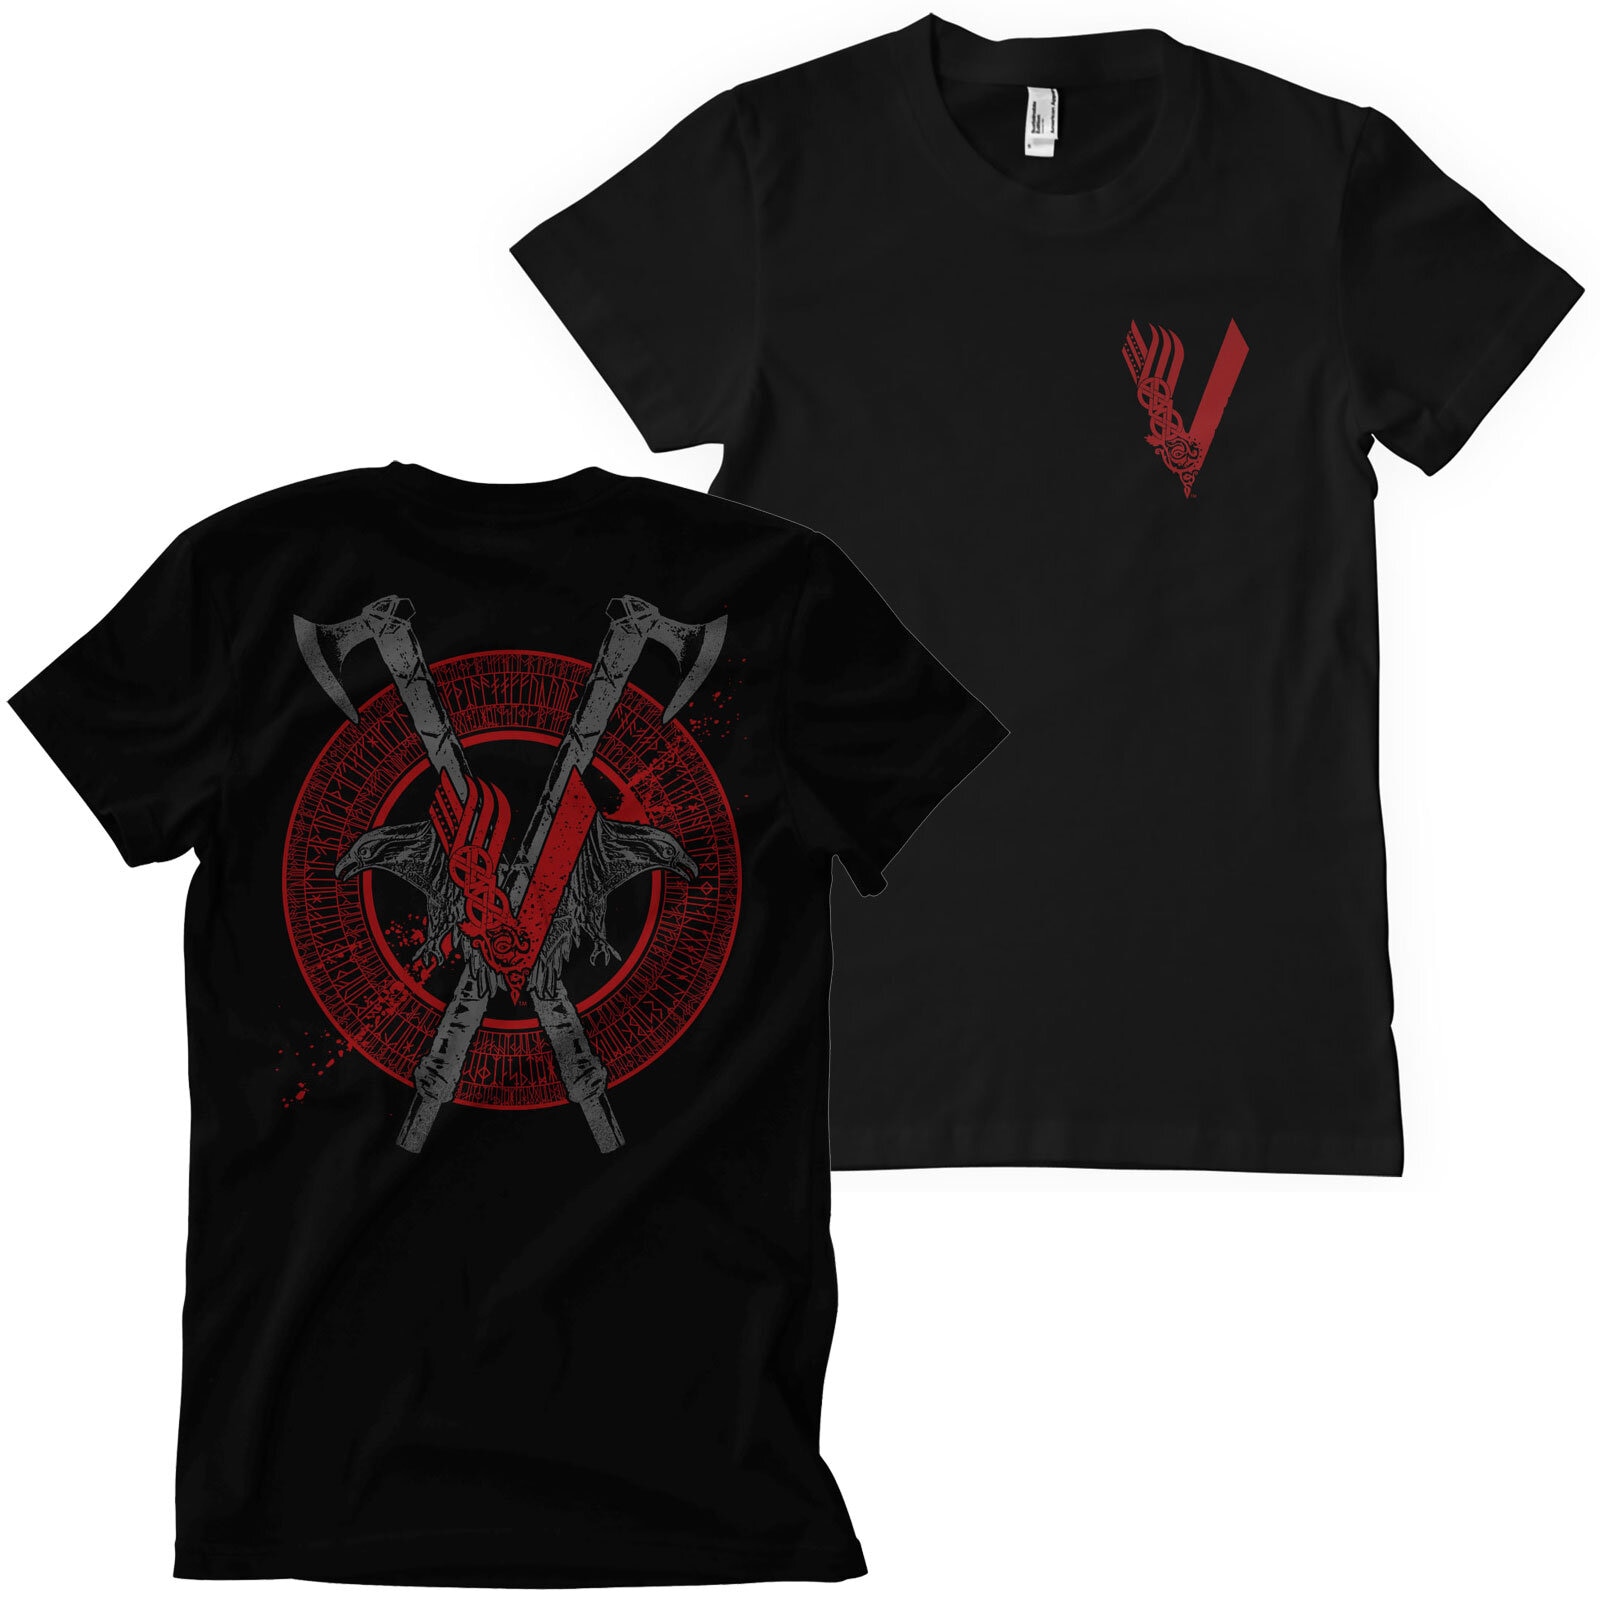 Vikings - Raven and Axe T-Shirt